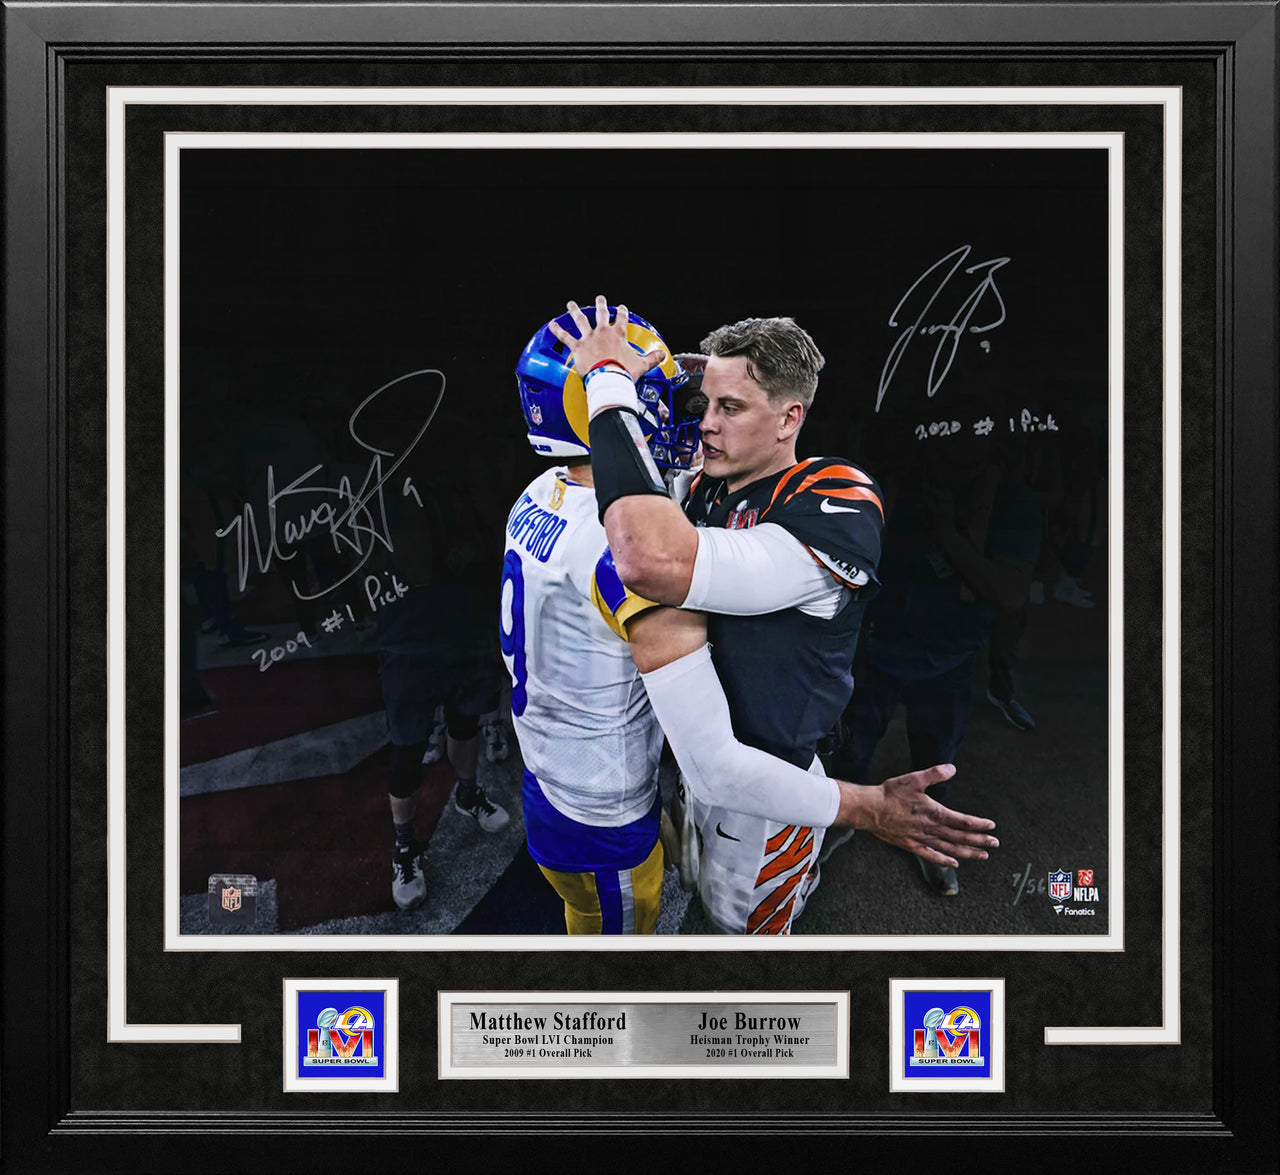 Matthew Stafford & Joe Burrow Autographed Super Bowl 16x20 Framed Football Photo Inscribed #1 Picks - Dynasty Sports & Framing 